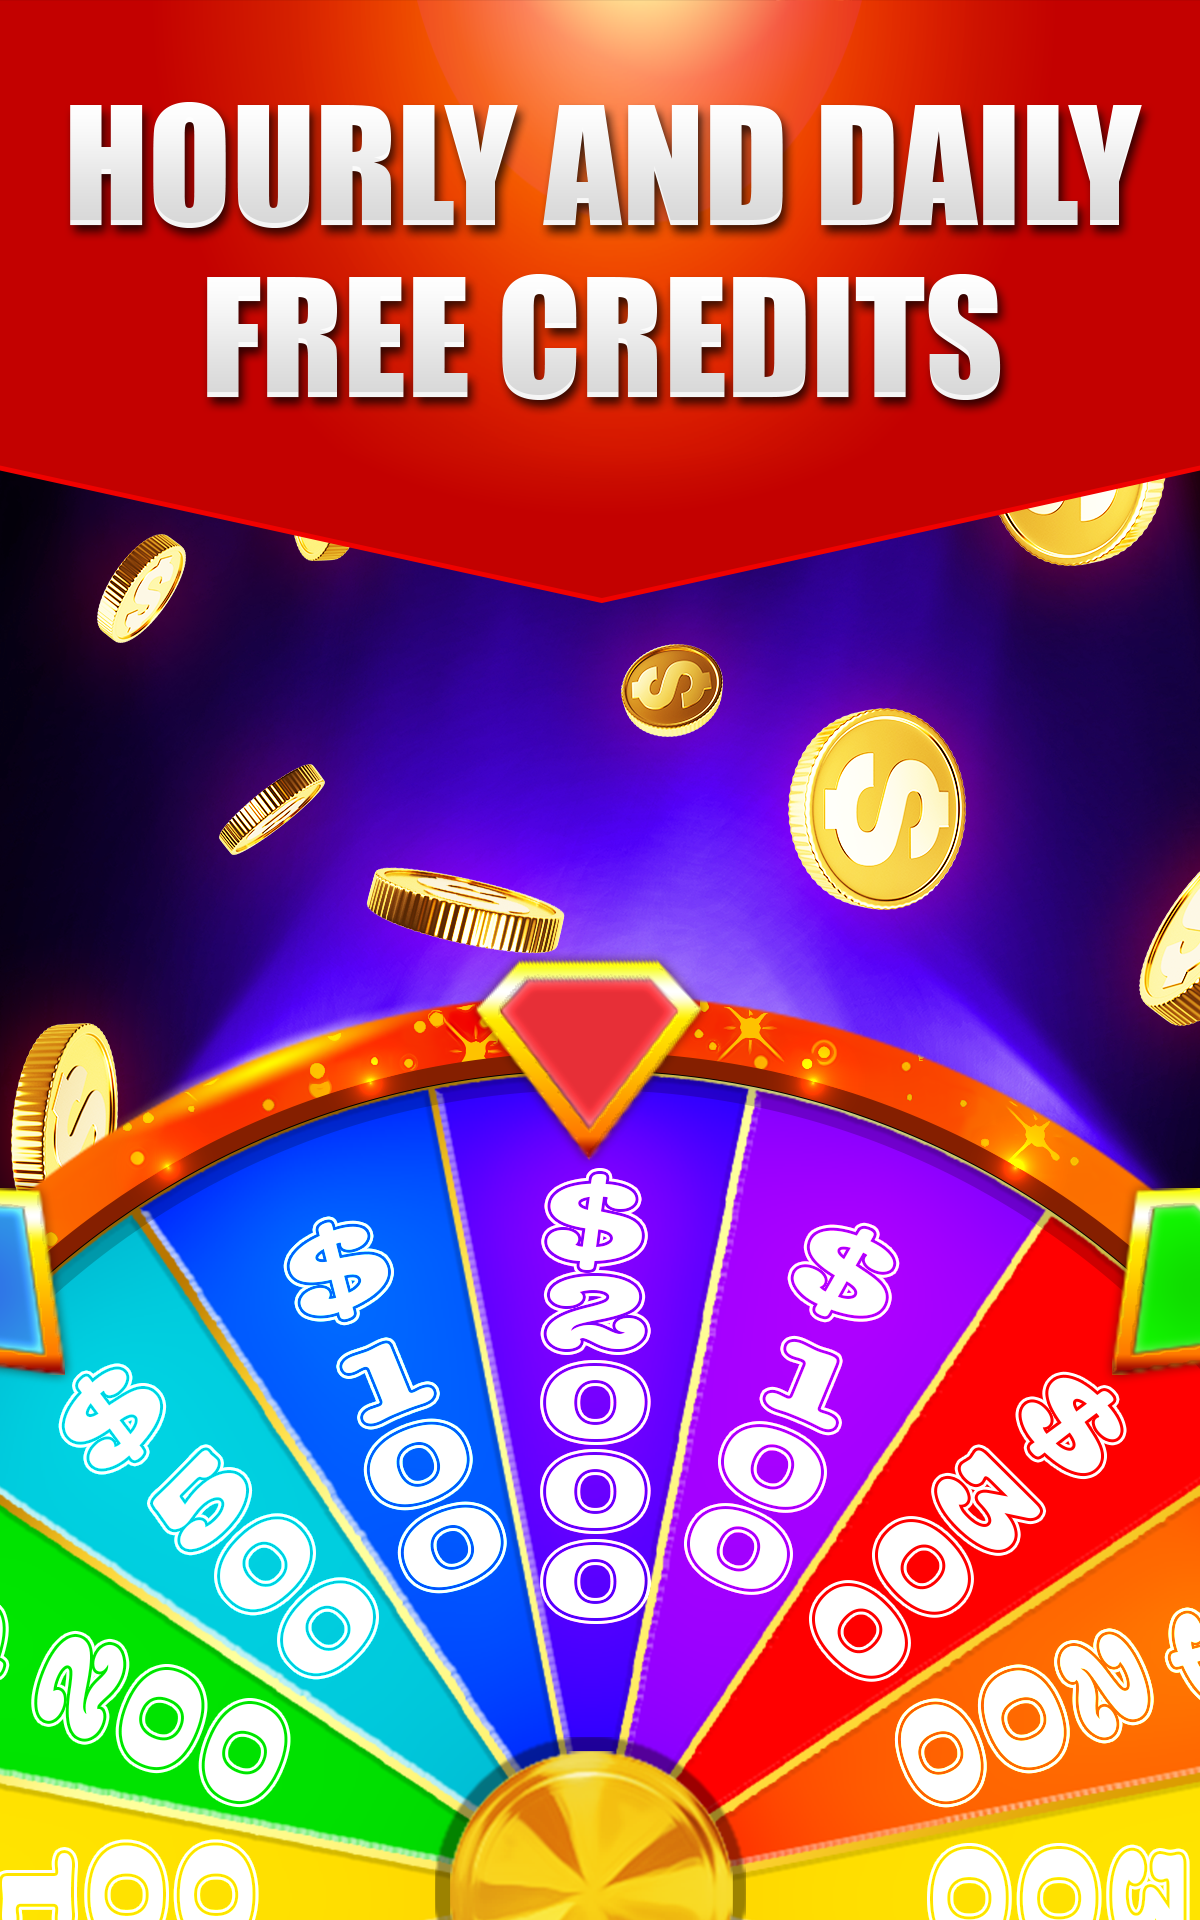 Free Bonus Round Slot Games Online